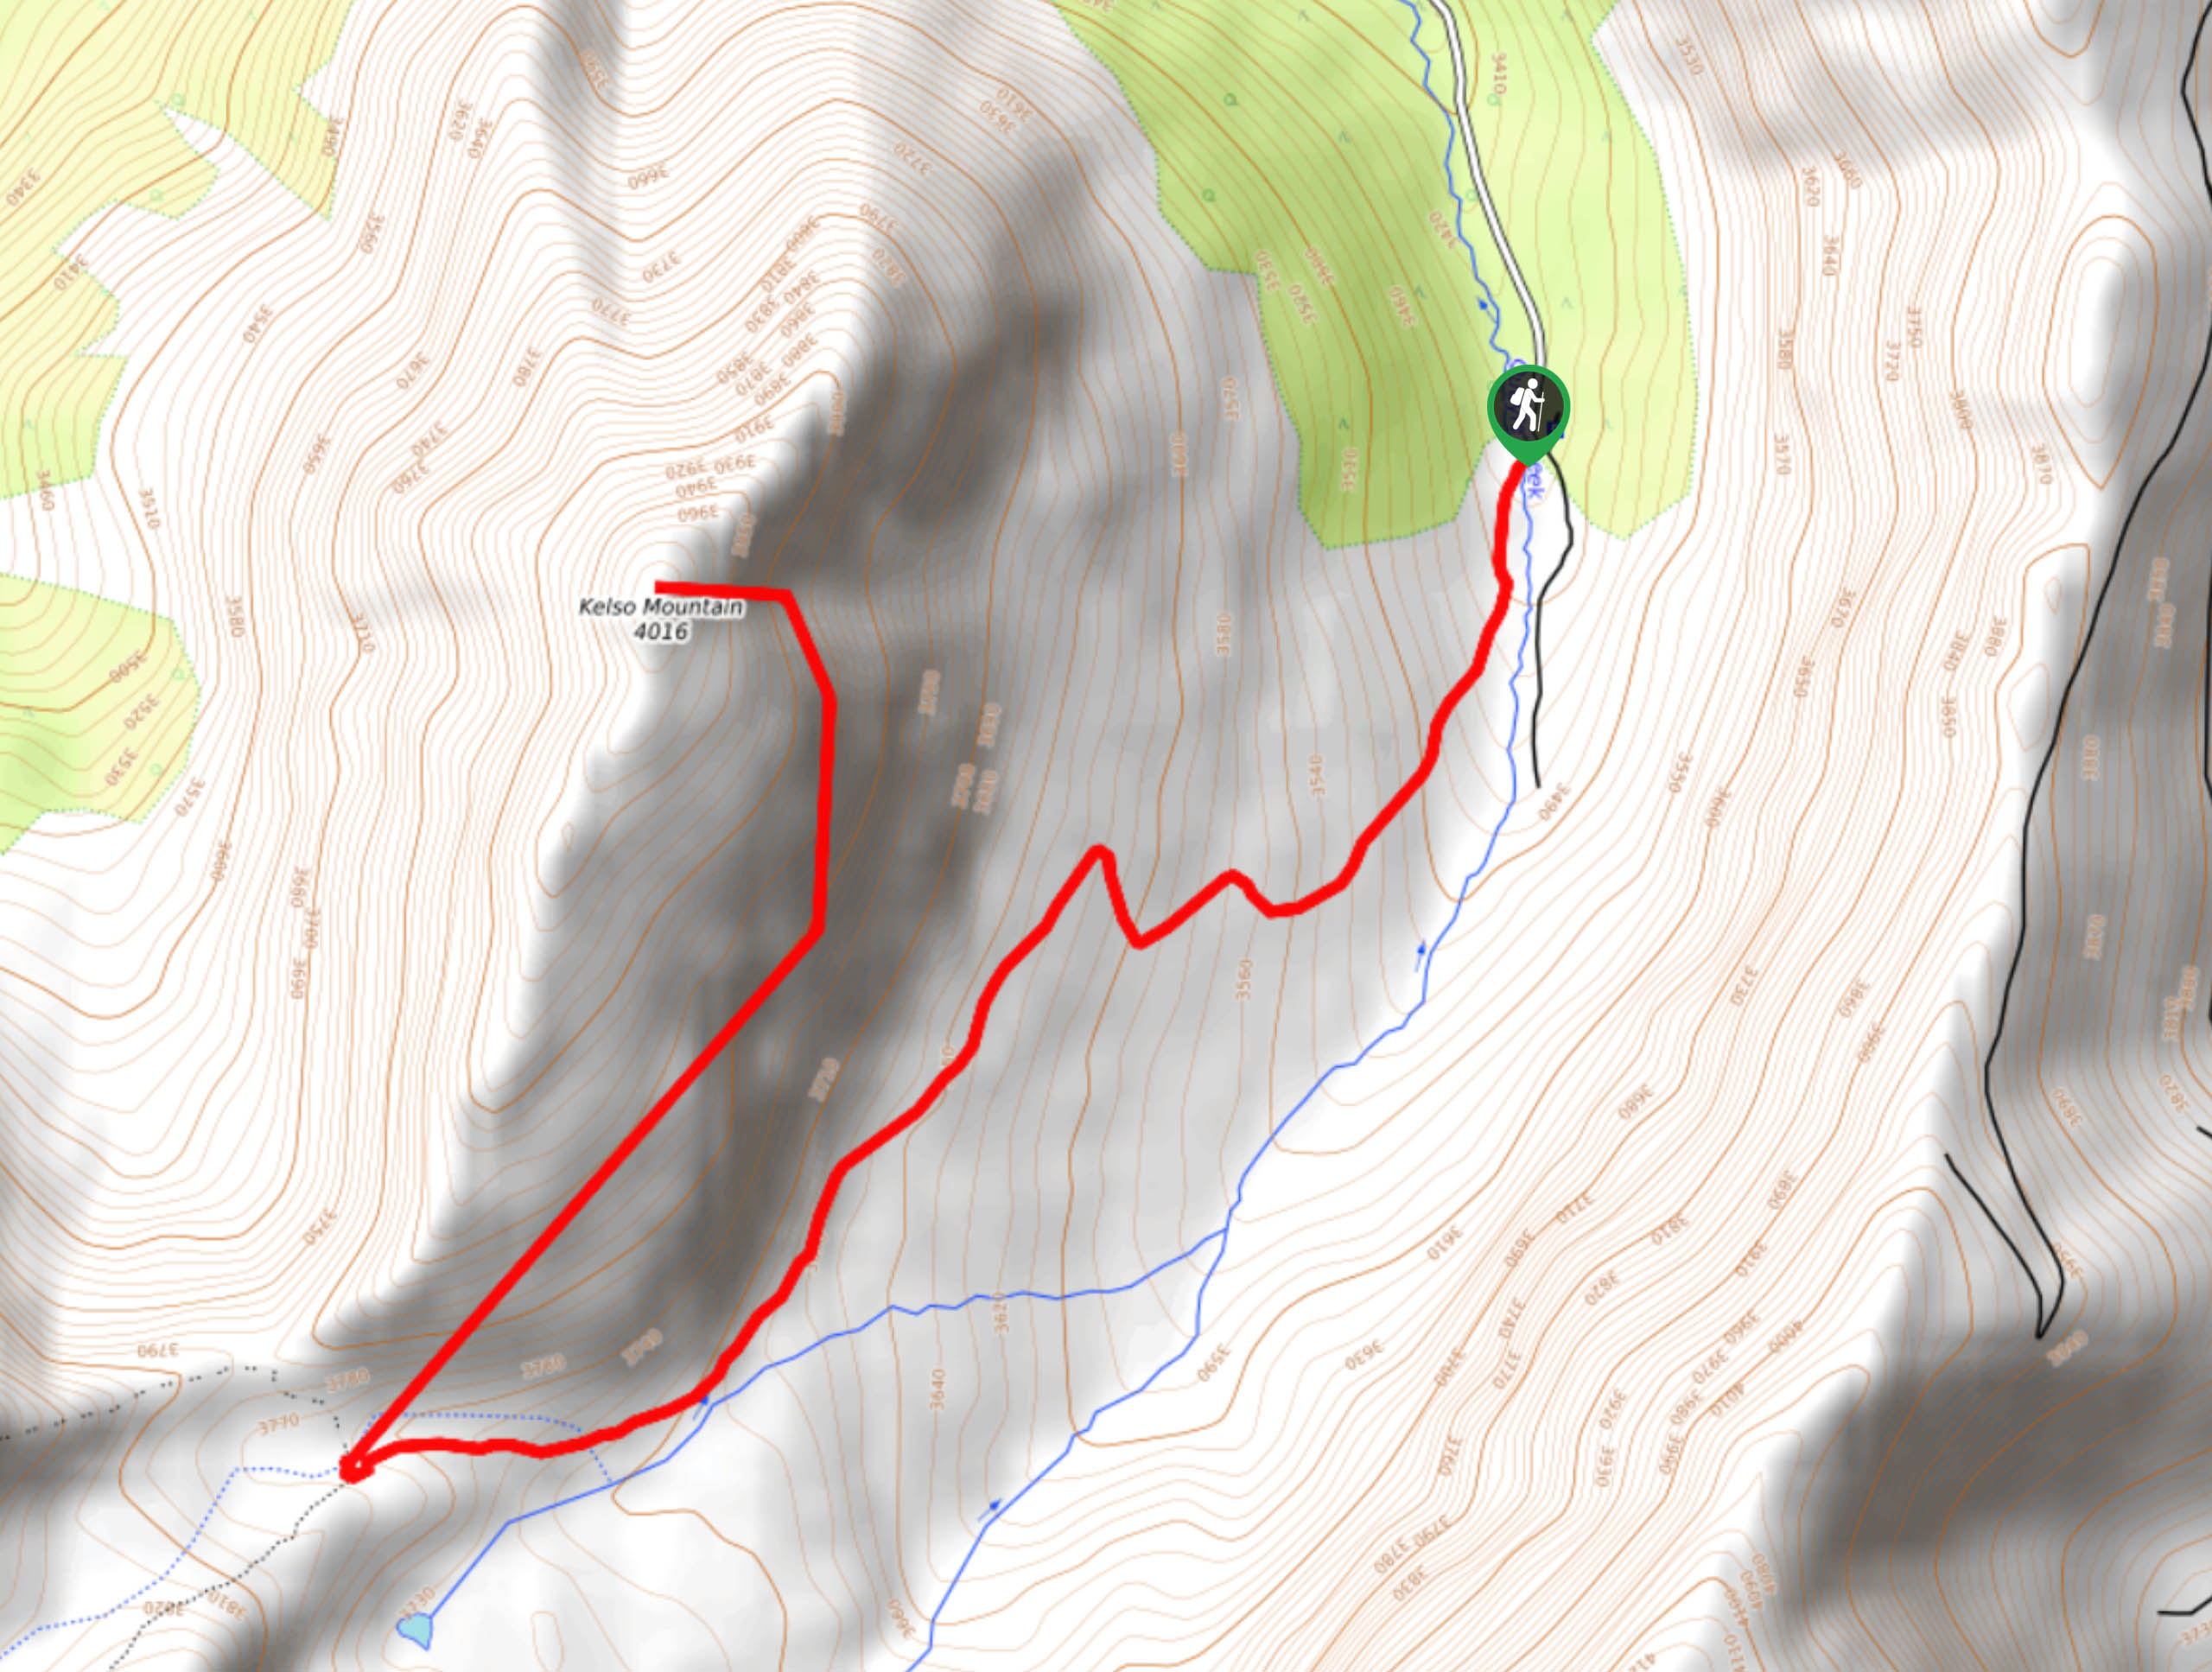 Kelso Mountain Hike Map